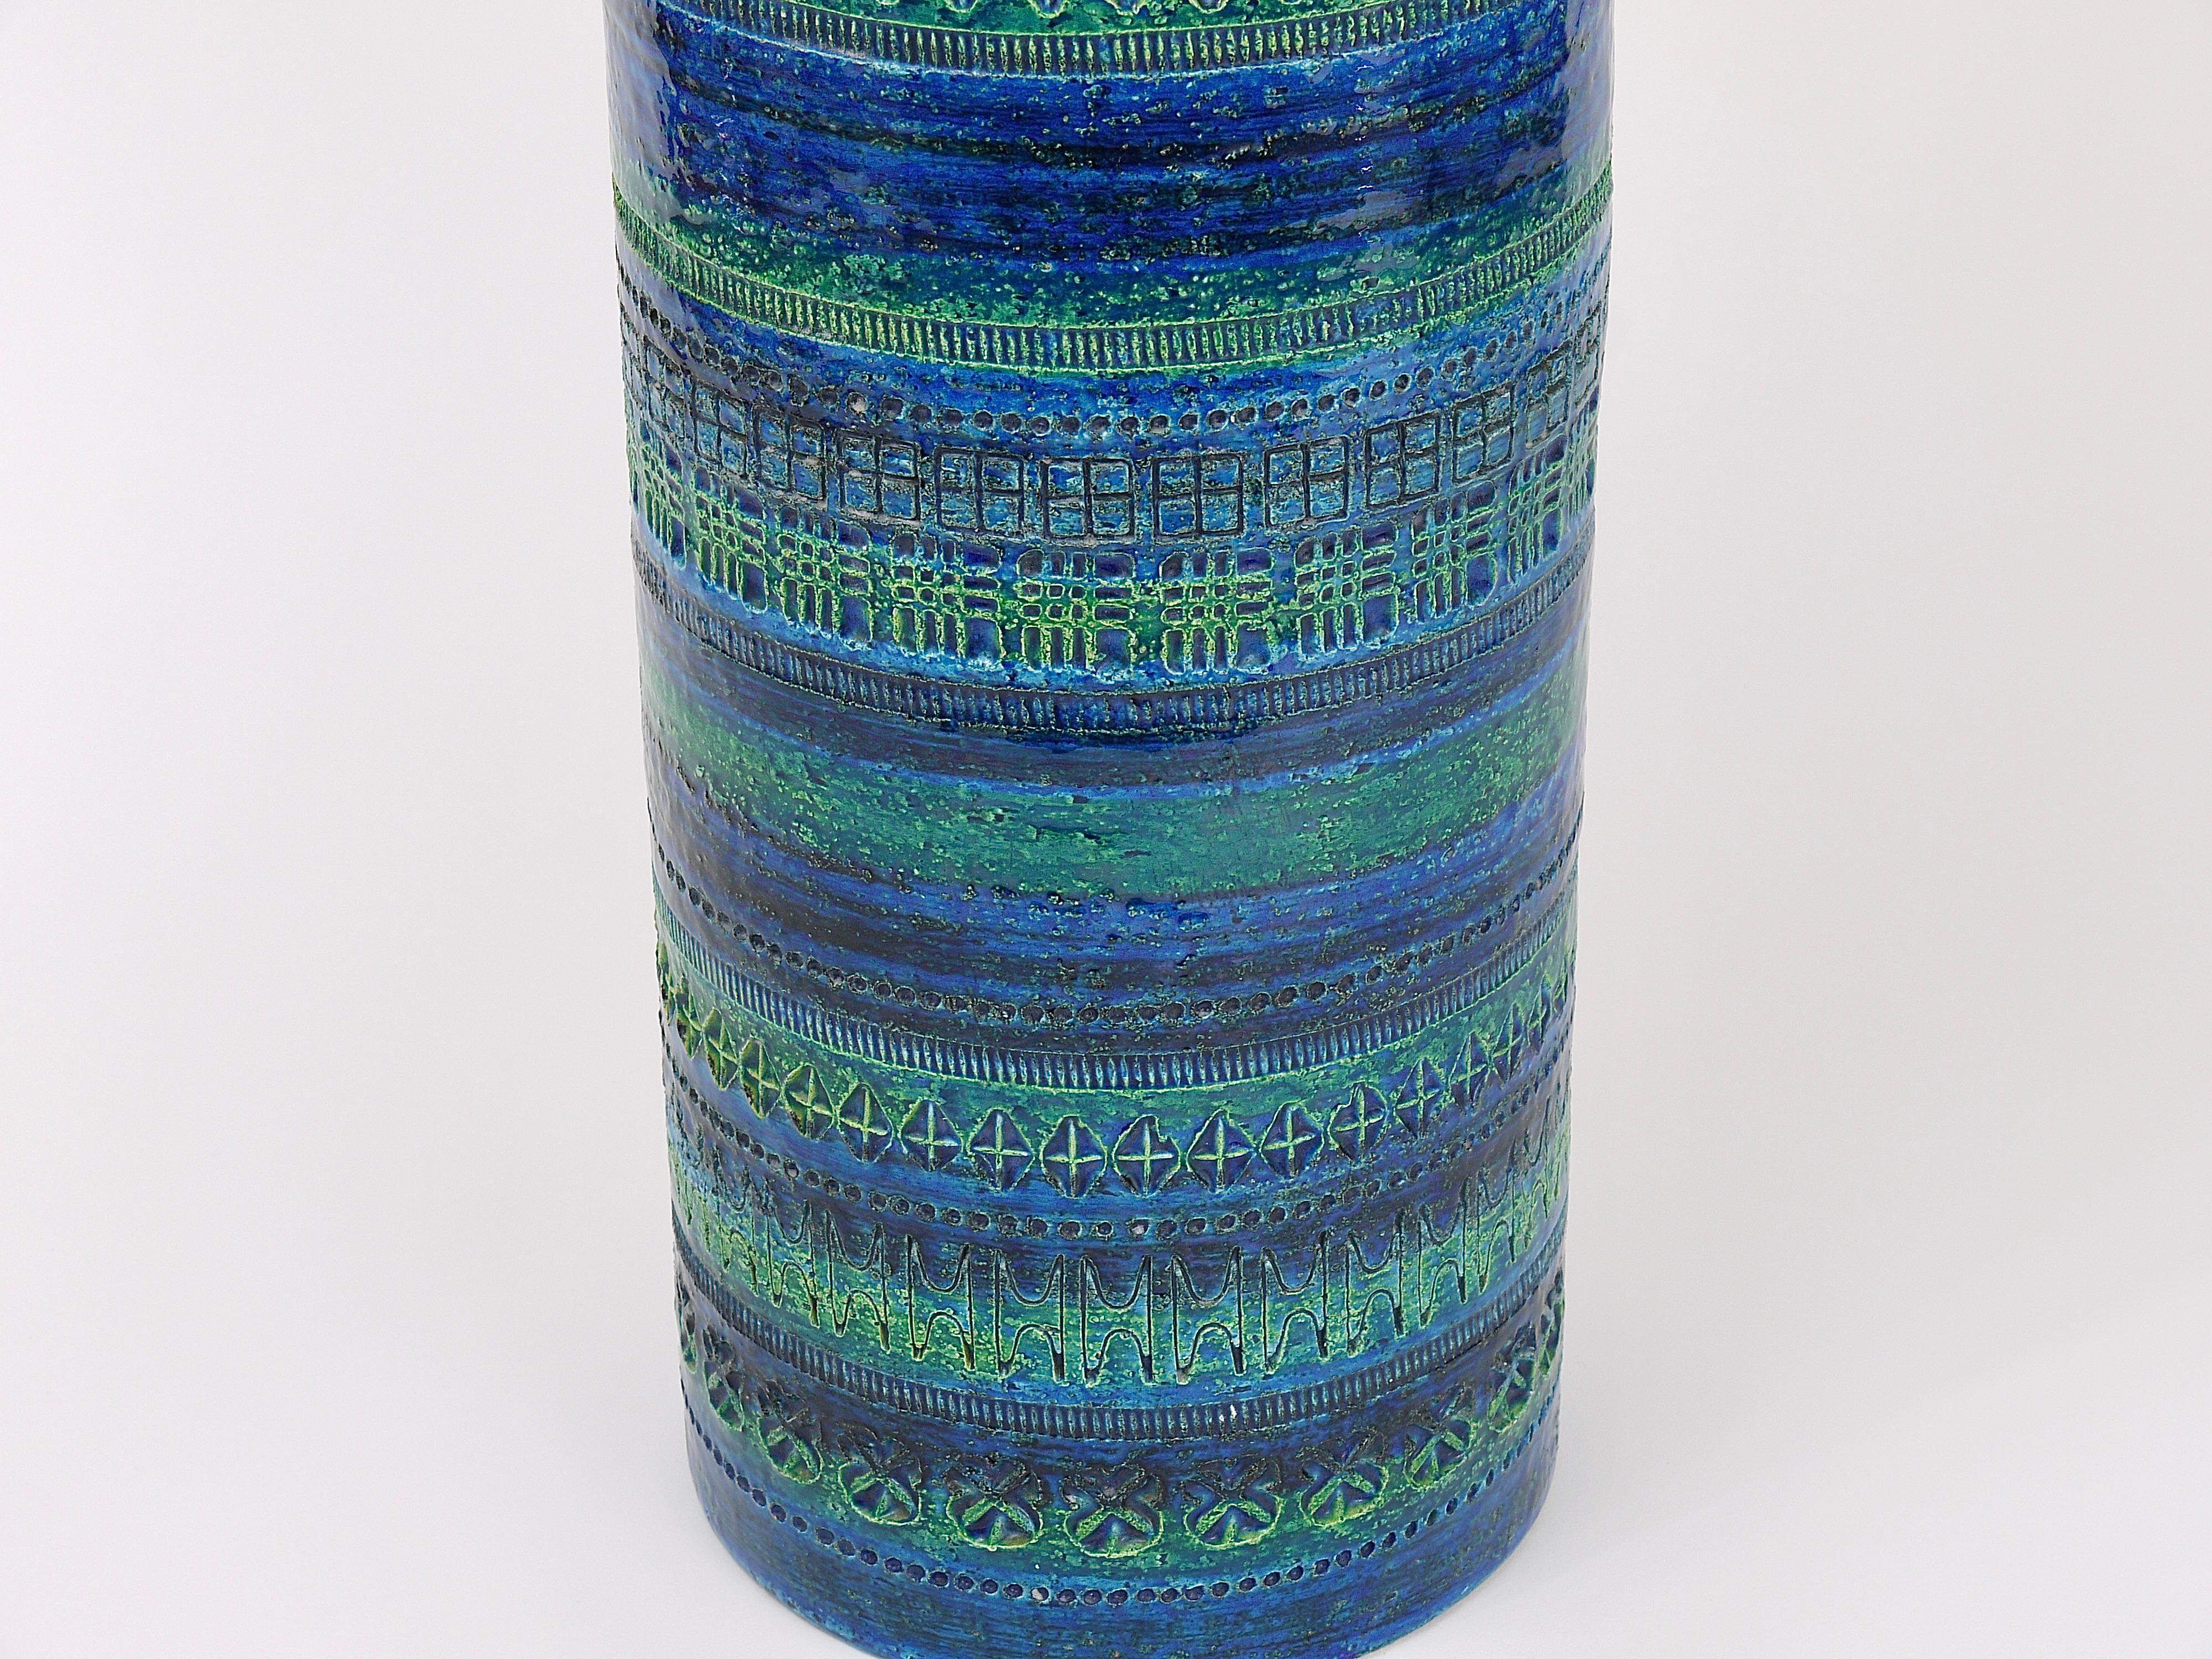 Aldo Londi Bitossi Rimini Blue Glazed Extra Large Ceramic Vase Umbrella Stand 1